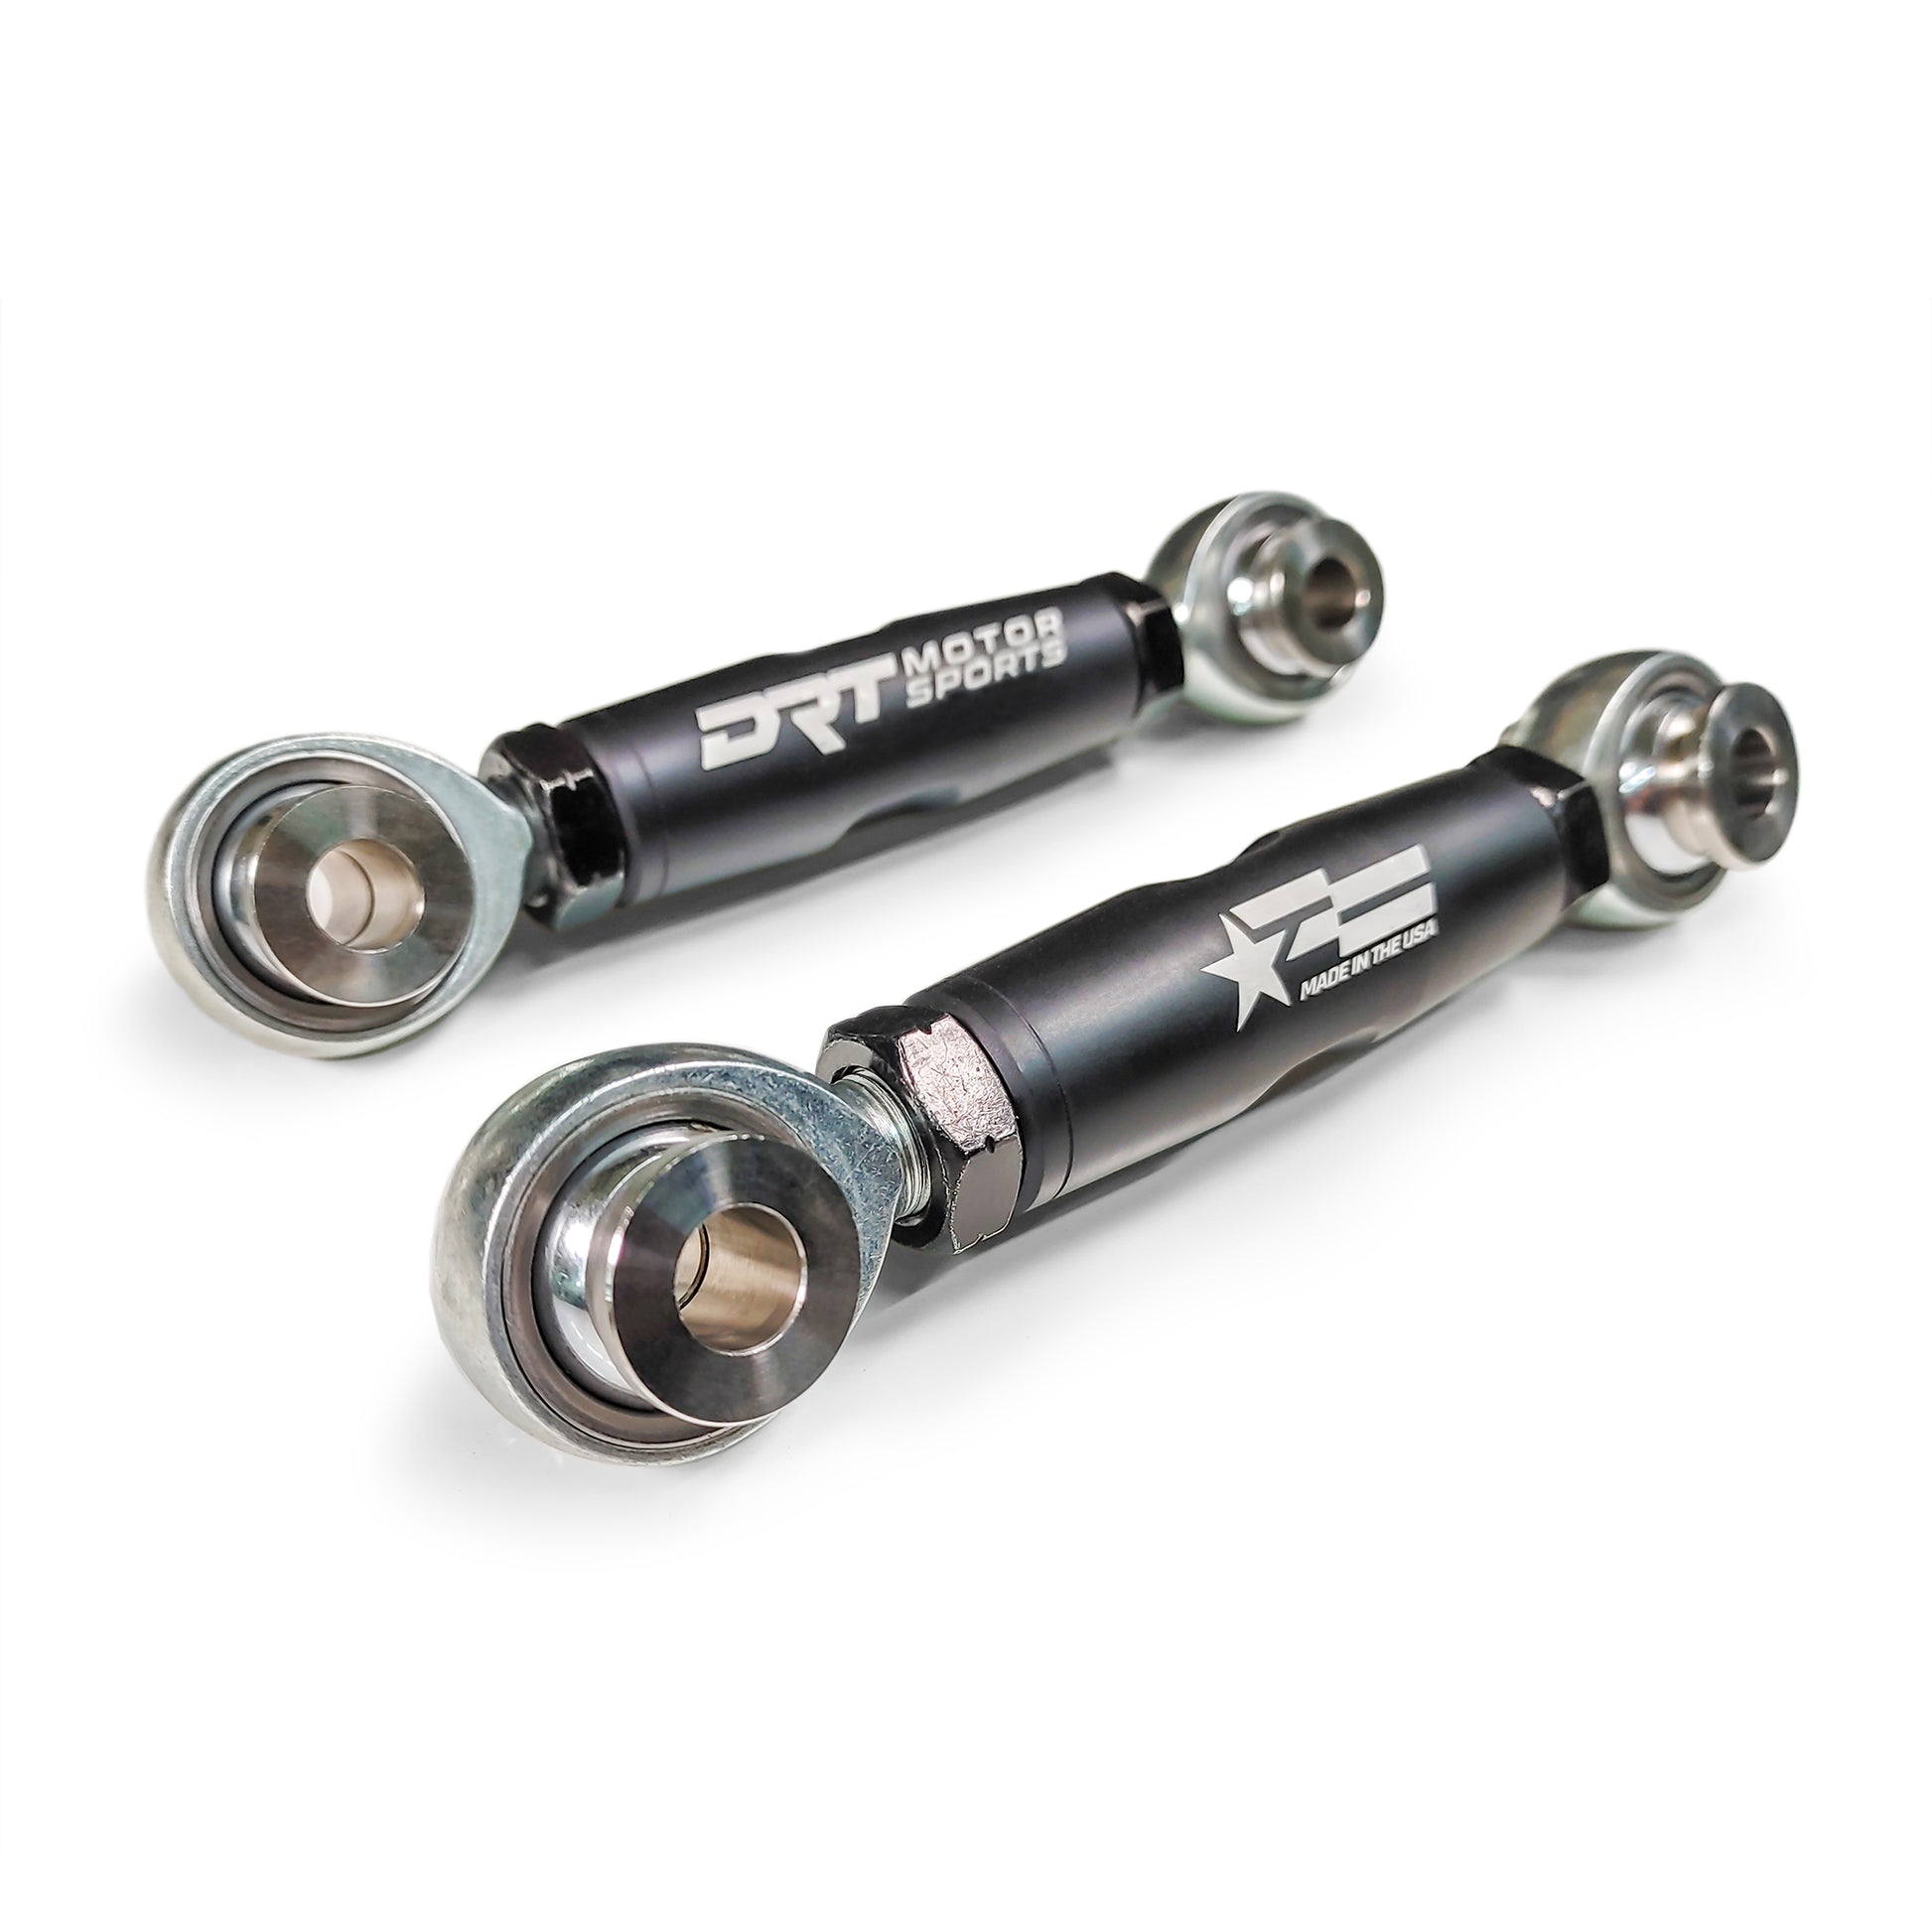 DRT Motorsports Billet Aluminum Barrel Adjustable Sway Bar Link Kit Polaris (M10) detail view